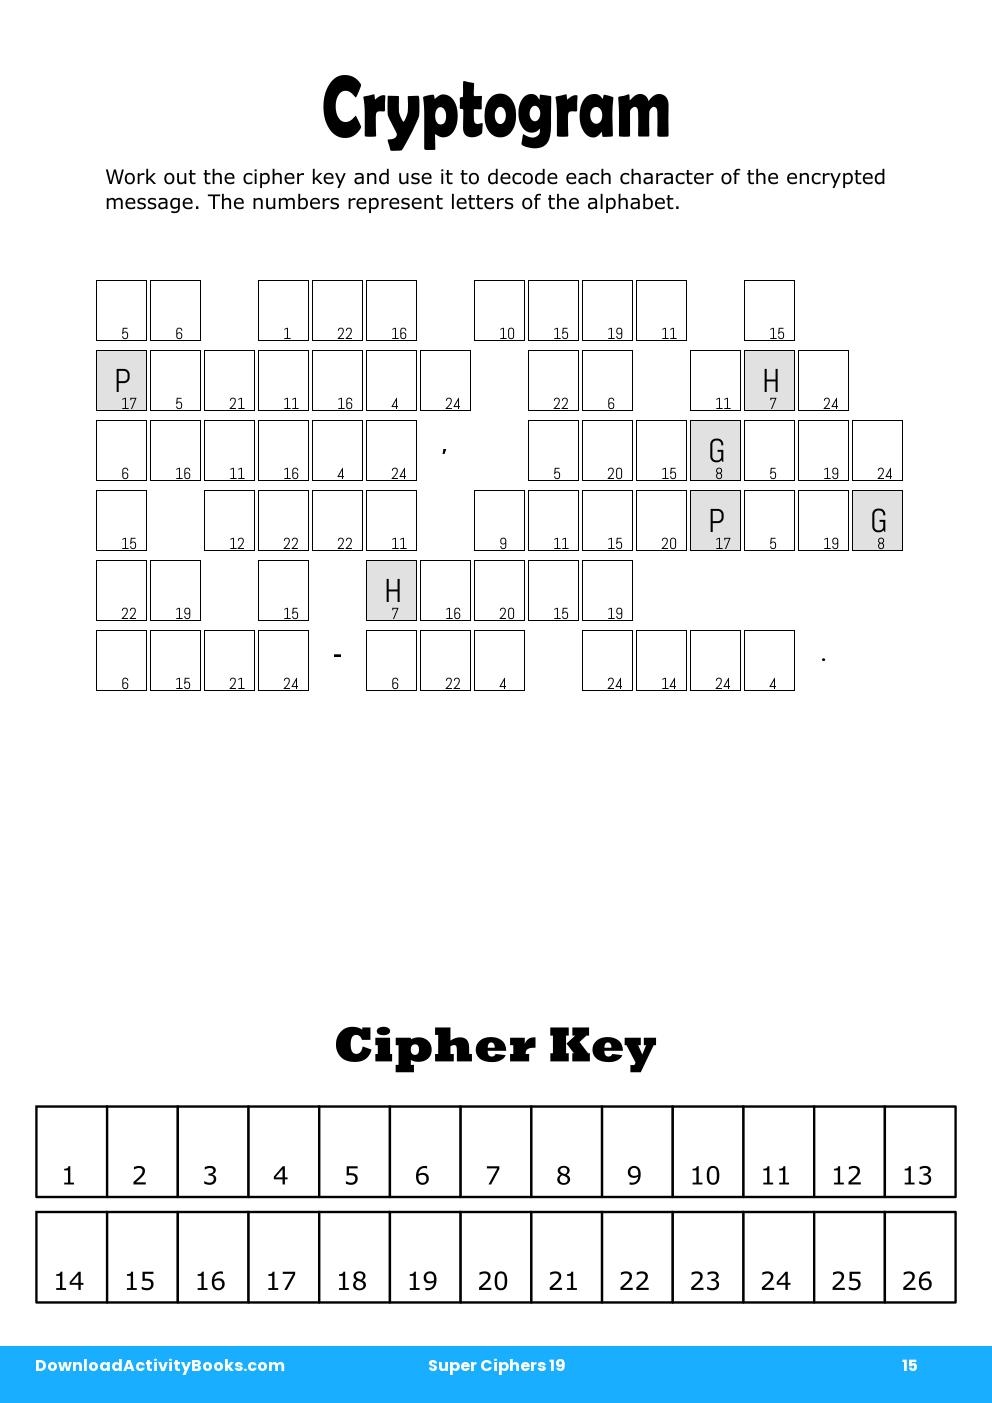 Cryptogram in Super Ciphers 19